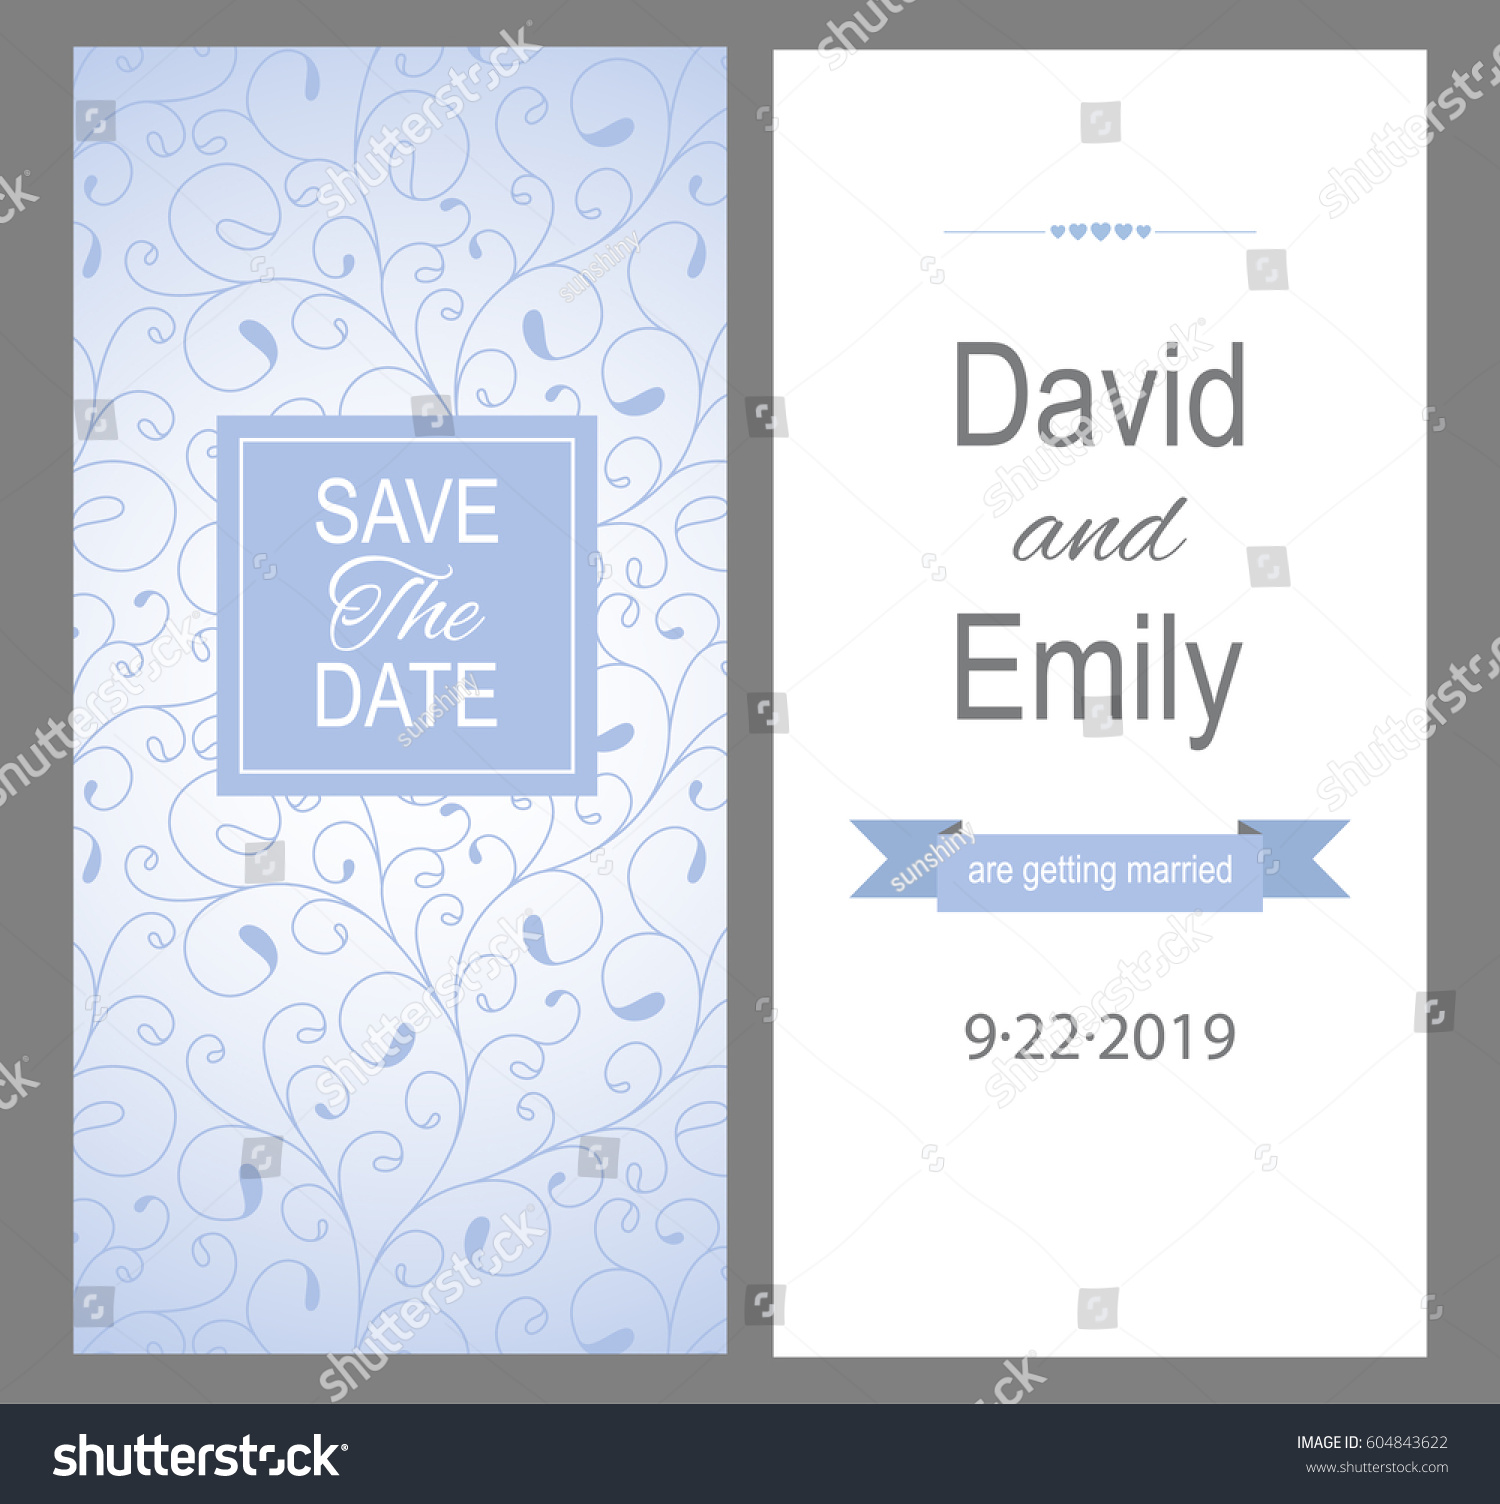 Save Date Beautiful Wedding Invitation Card Stock Vector ...